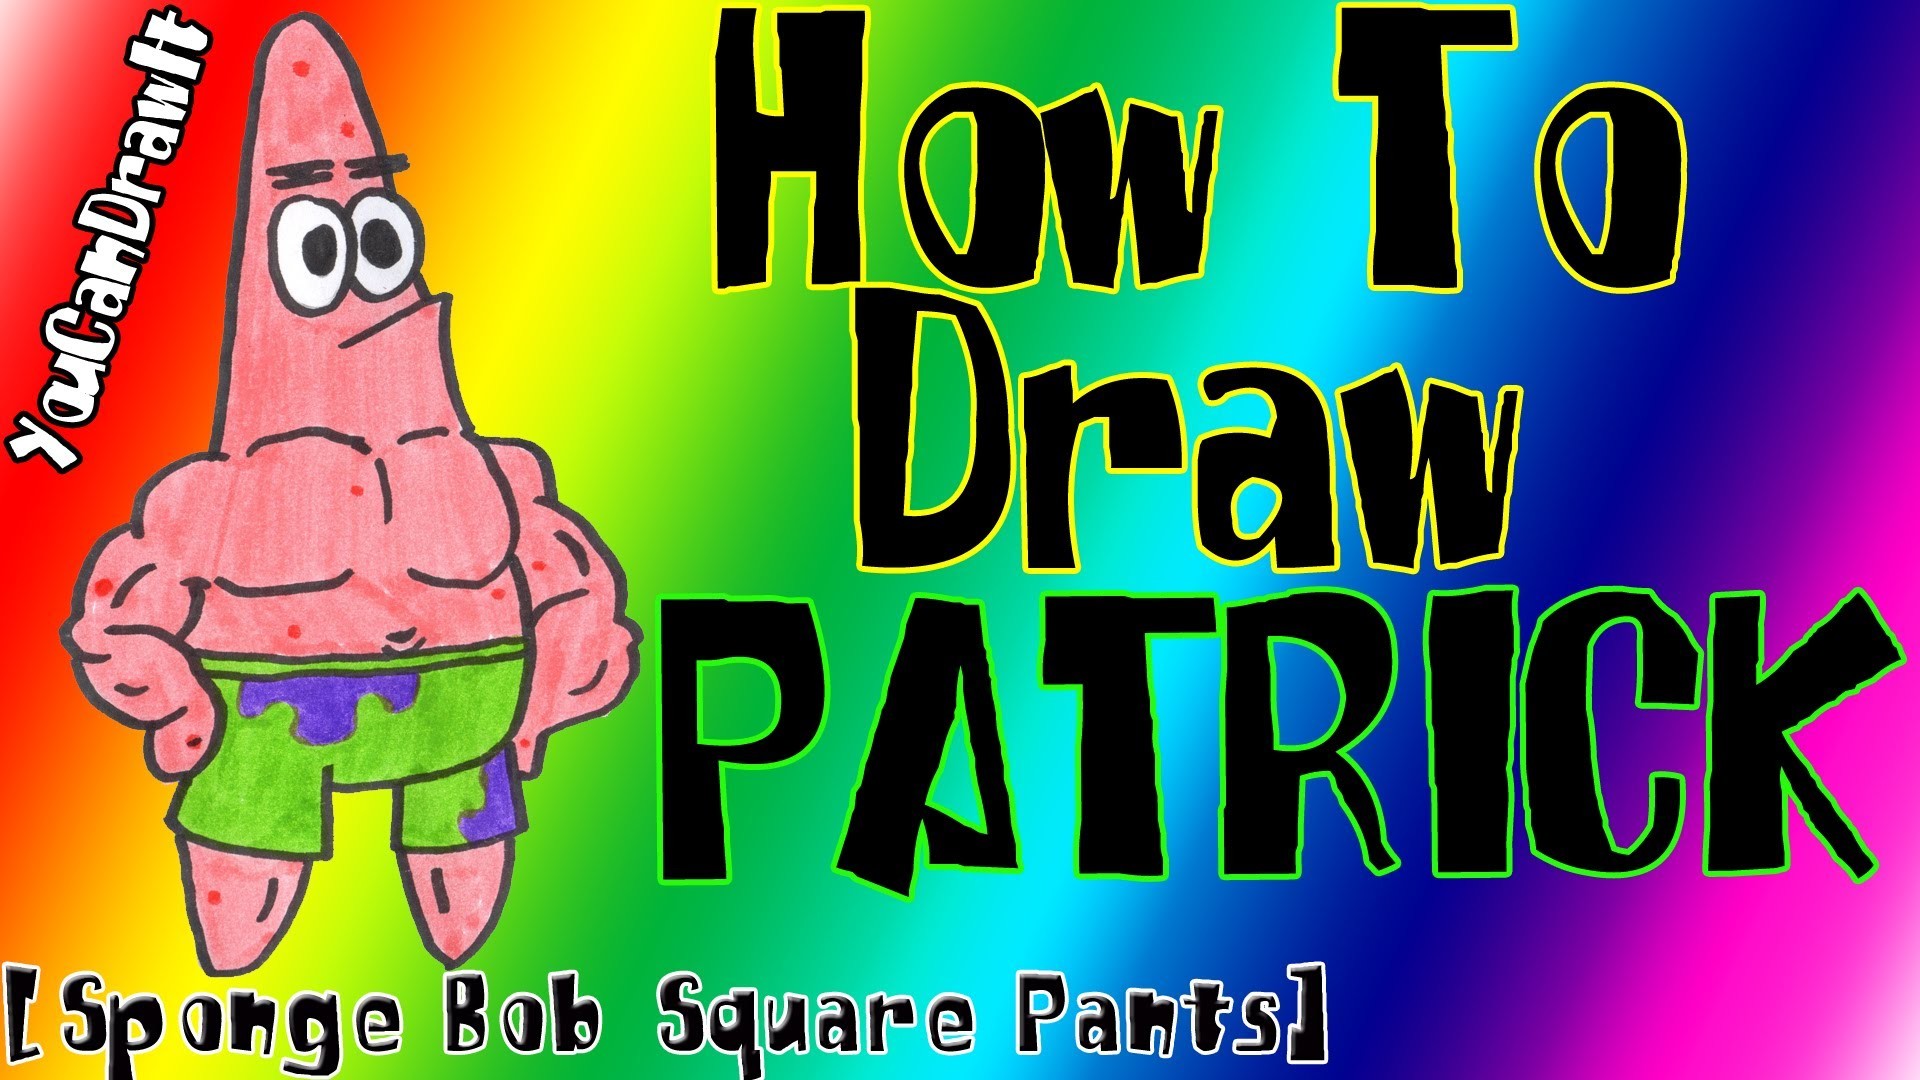 1920x1080 How To Draw Patrick Star from Sponge Bob Square Pants â YouCanDrawIt ã  1080p HD